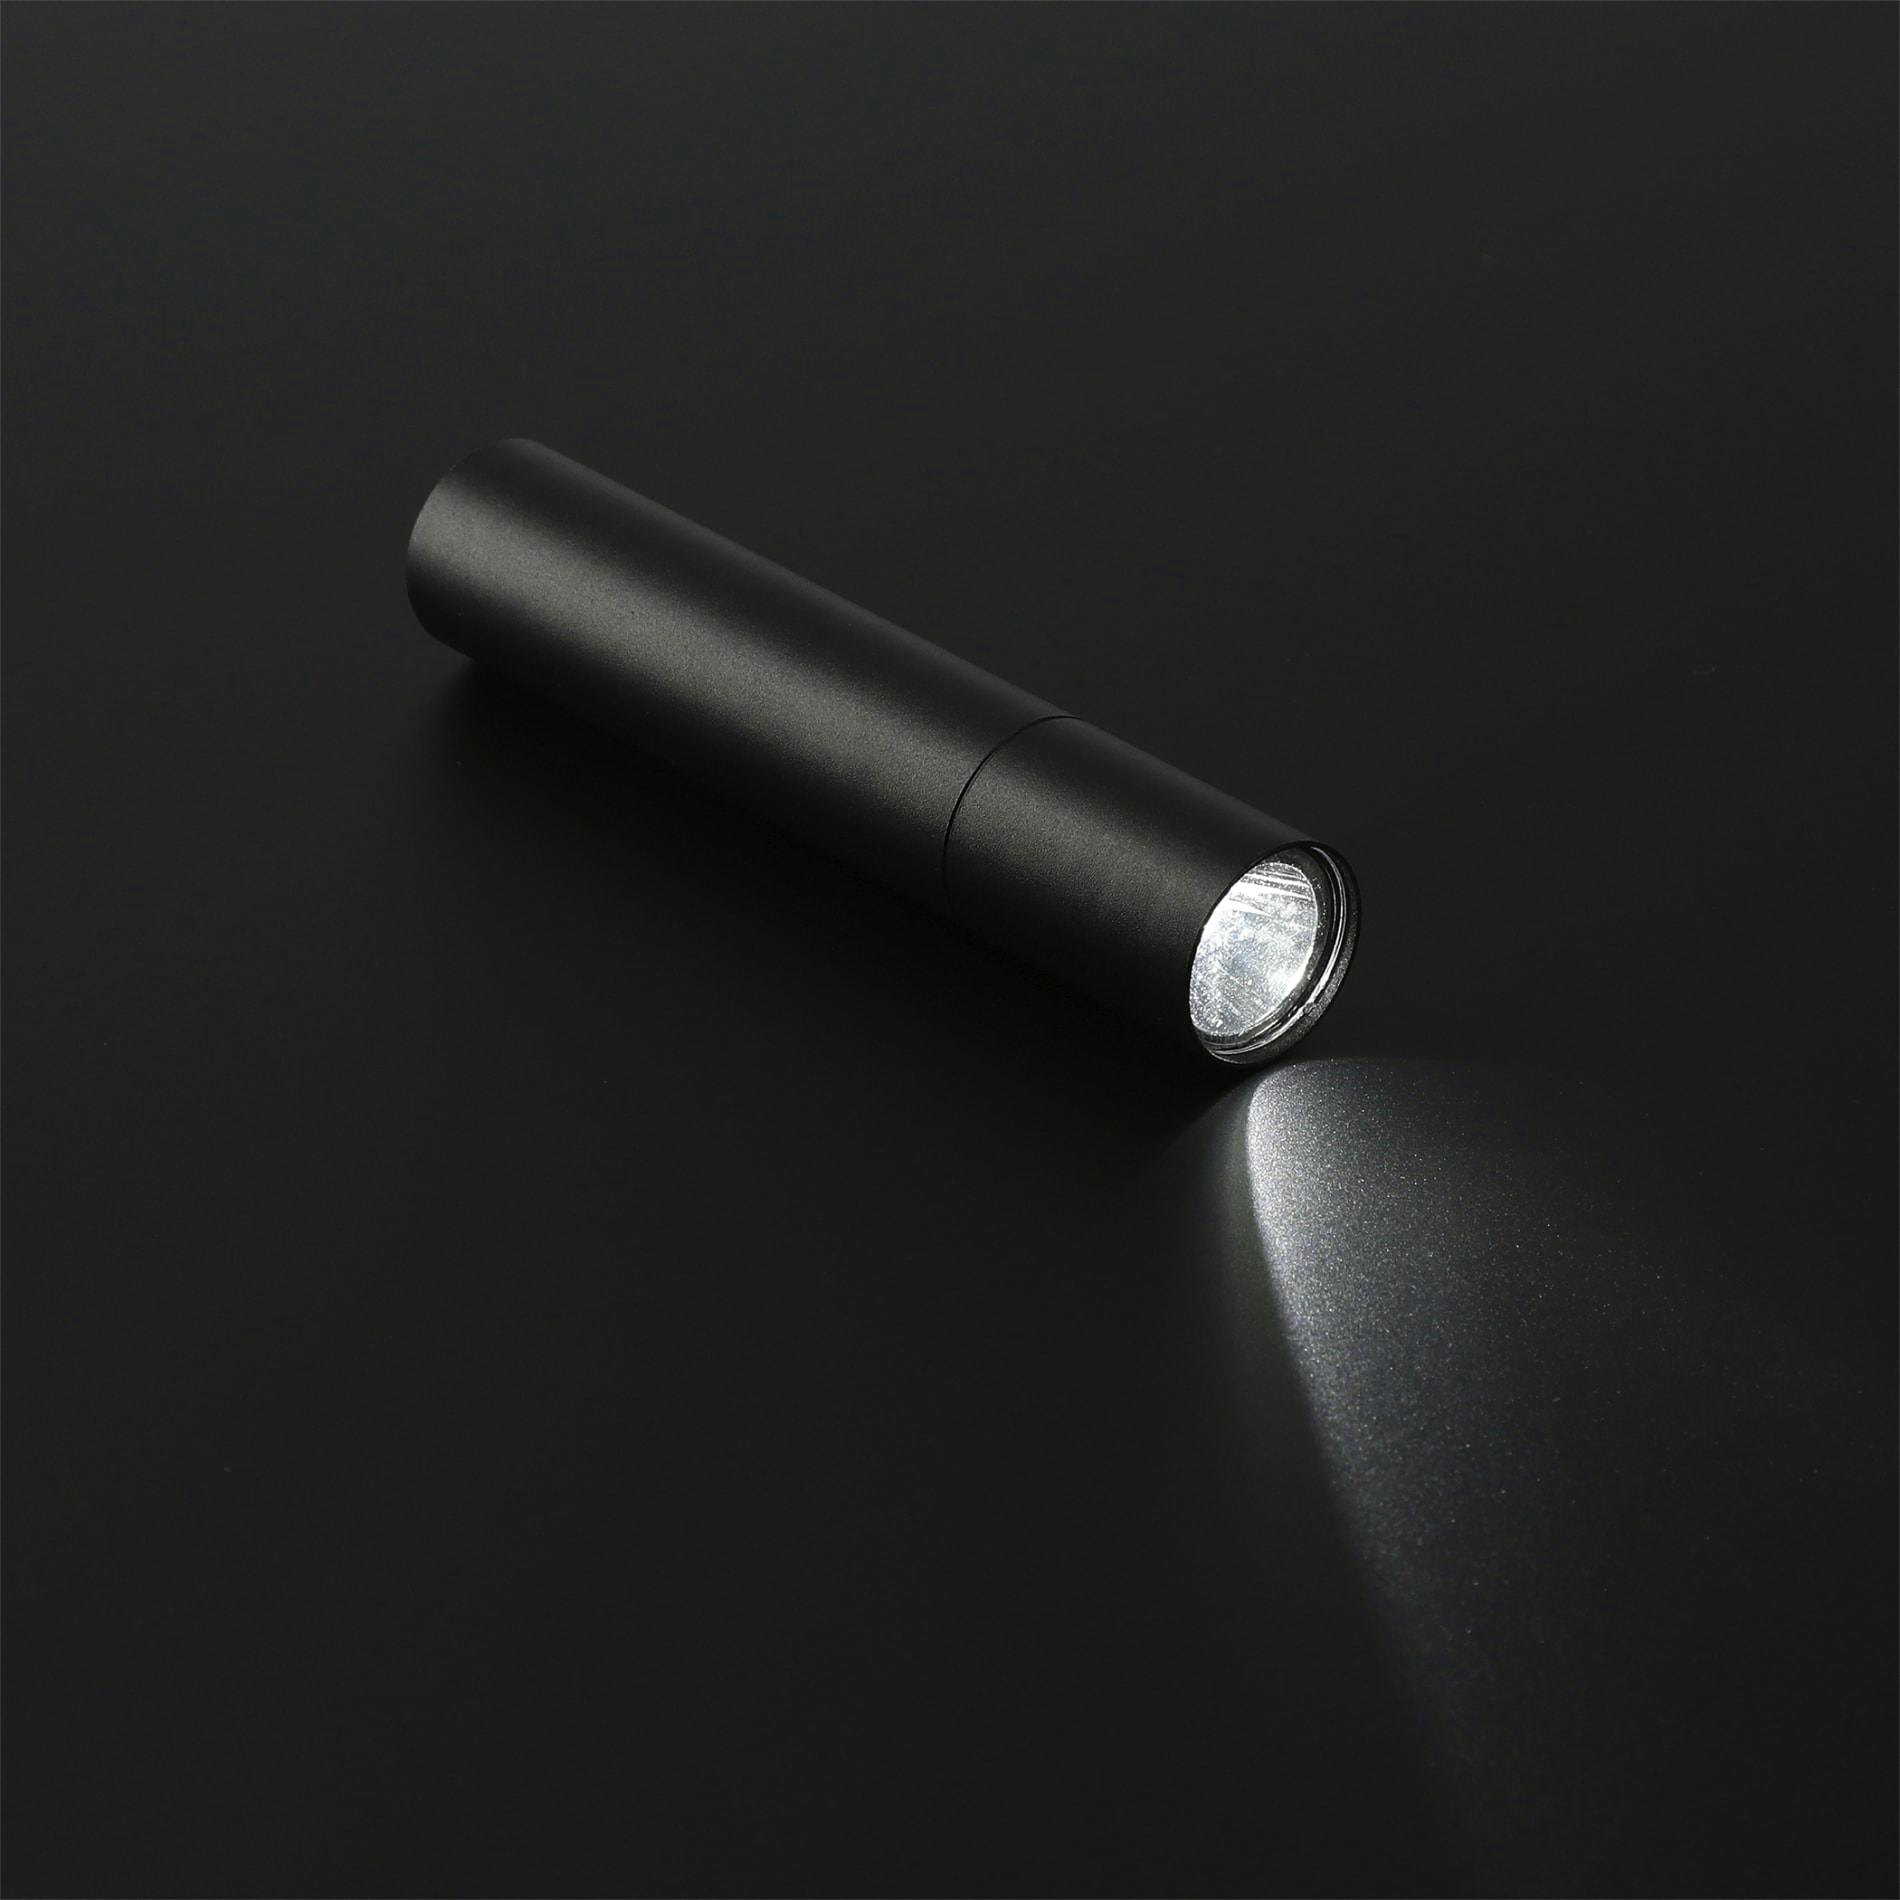 Rechargeable 1200mah Flashlight - additional Image 6